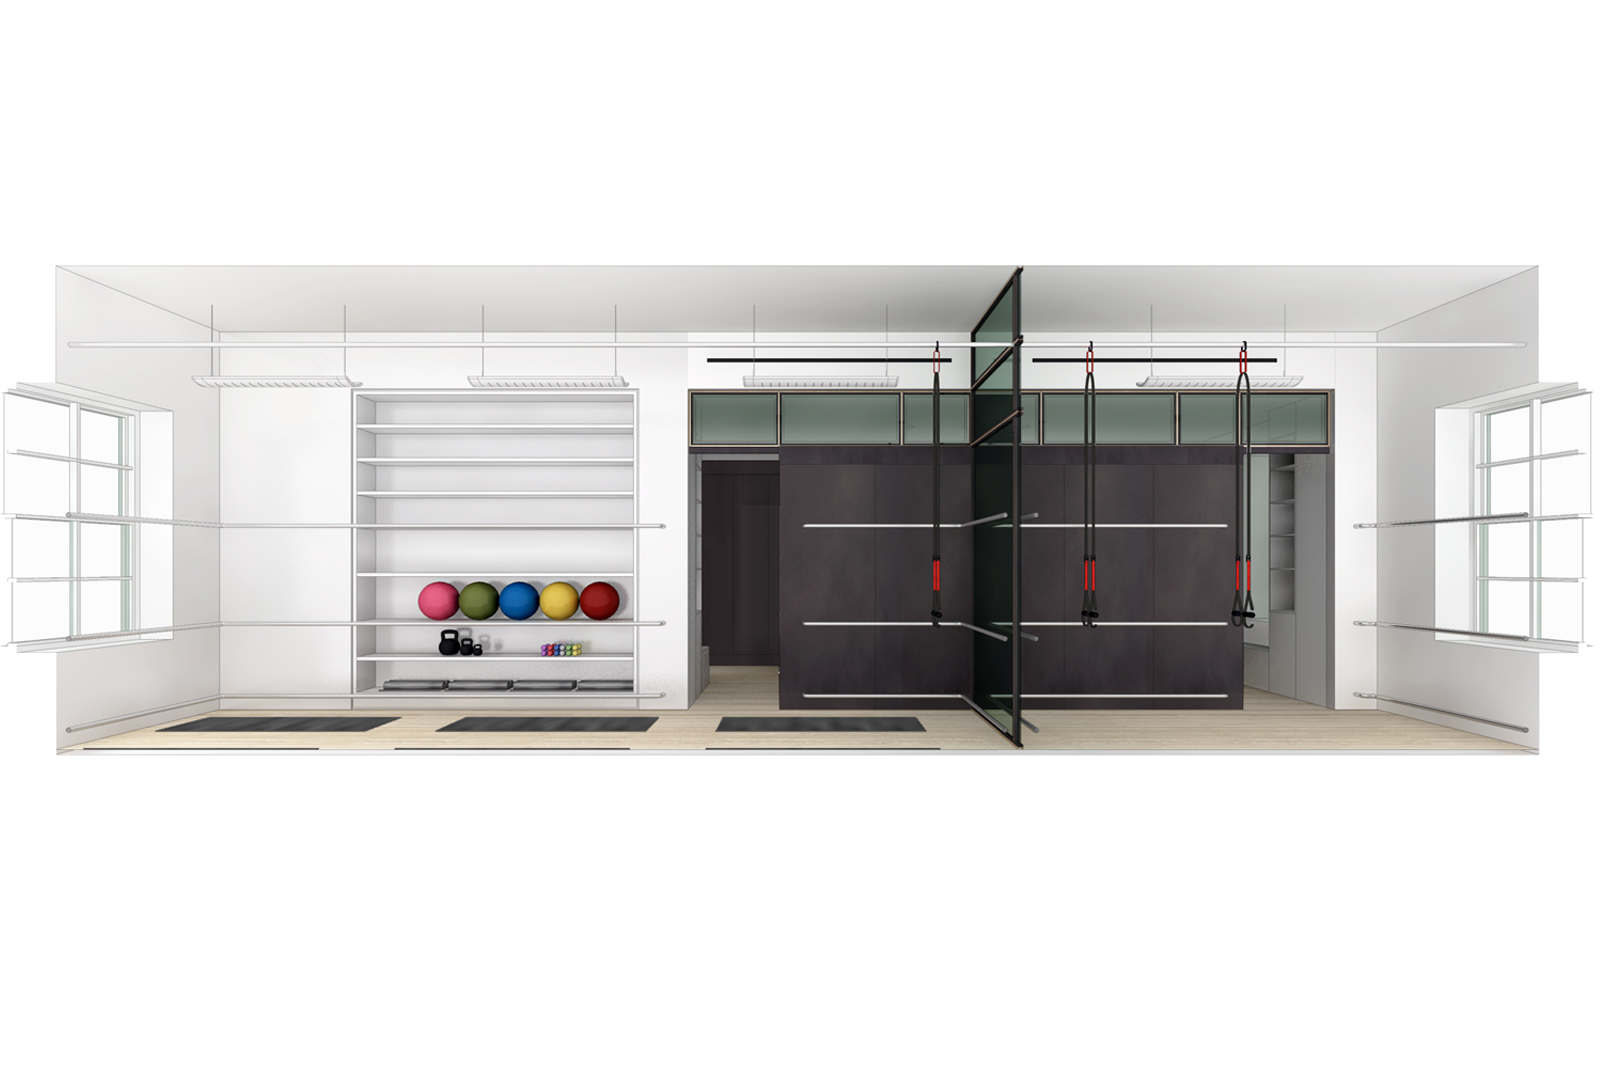 02-res4-resolution-4-architecture-modern-fitness-gym-commercial-interior-renovation-mpr-digital-studios-longitudinal-section-door-opened-rendering.jpg